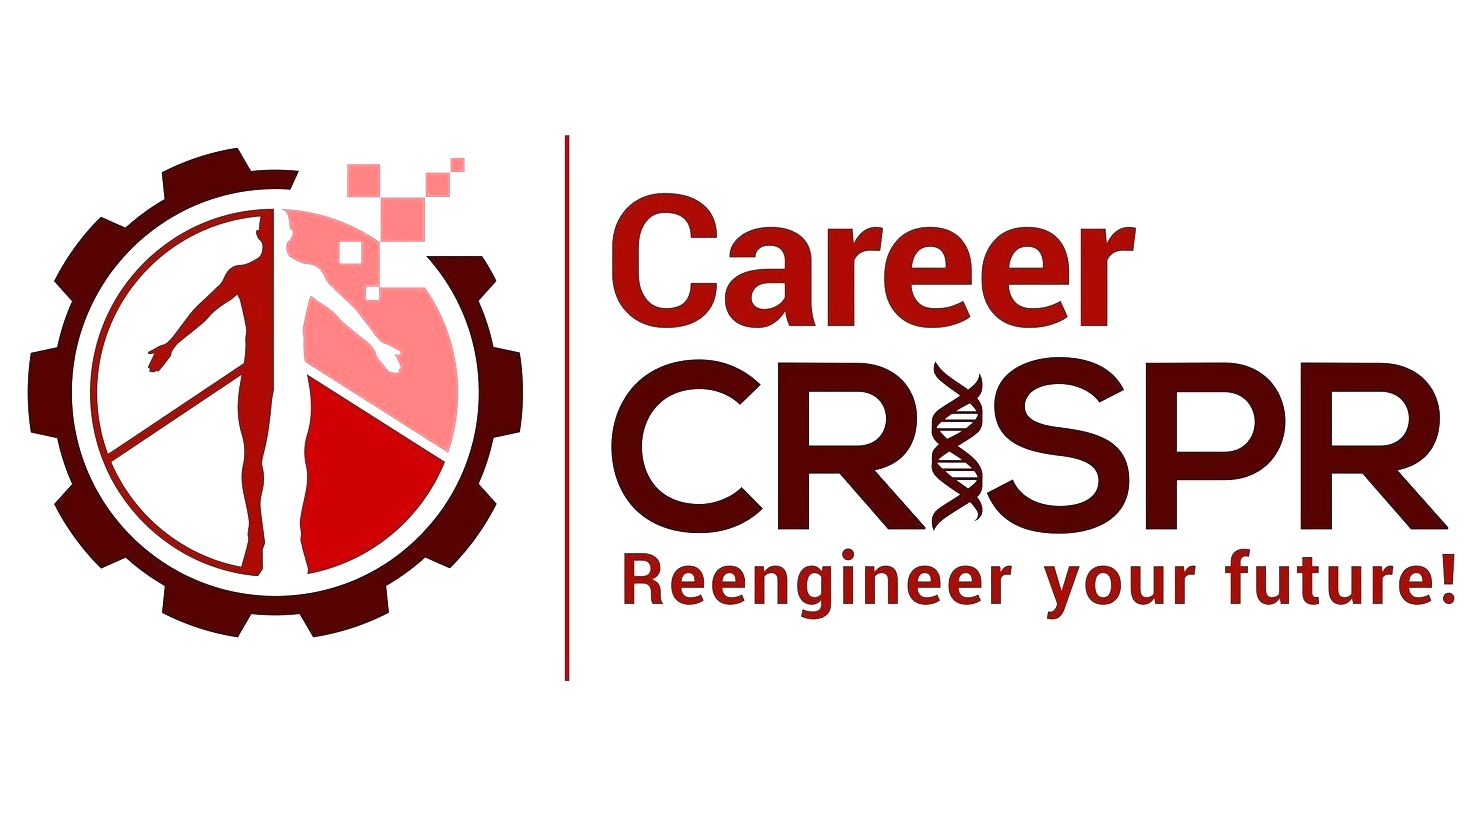 Career CRISPR